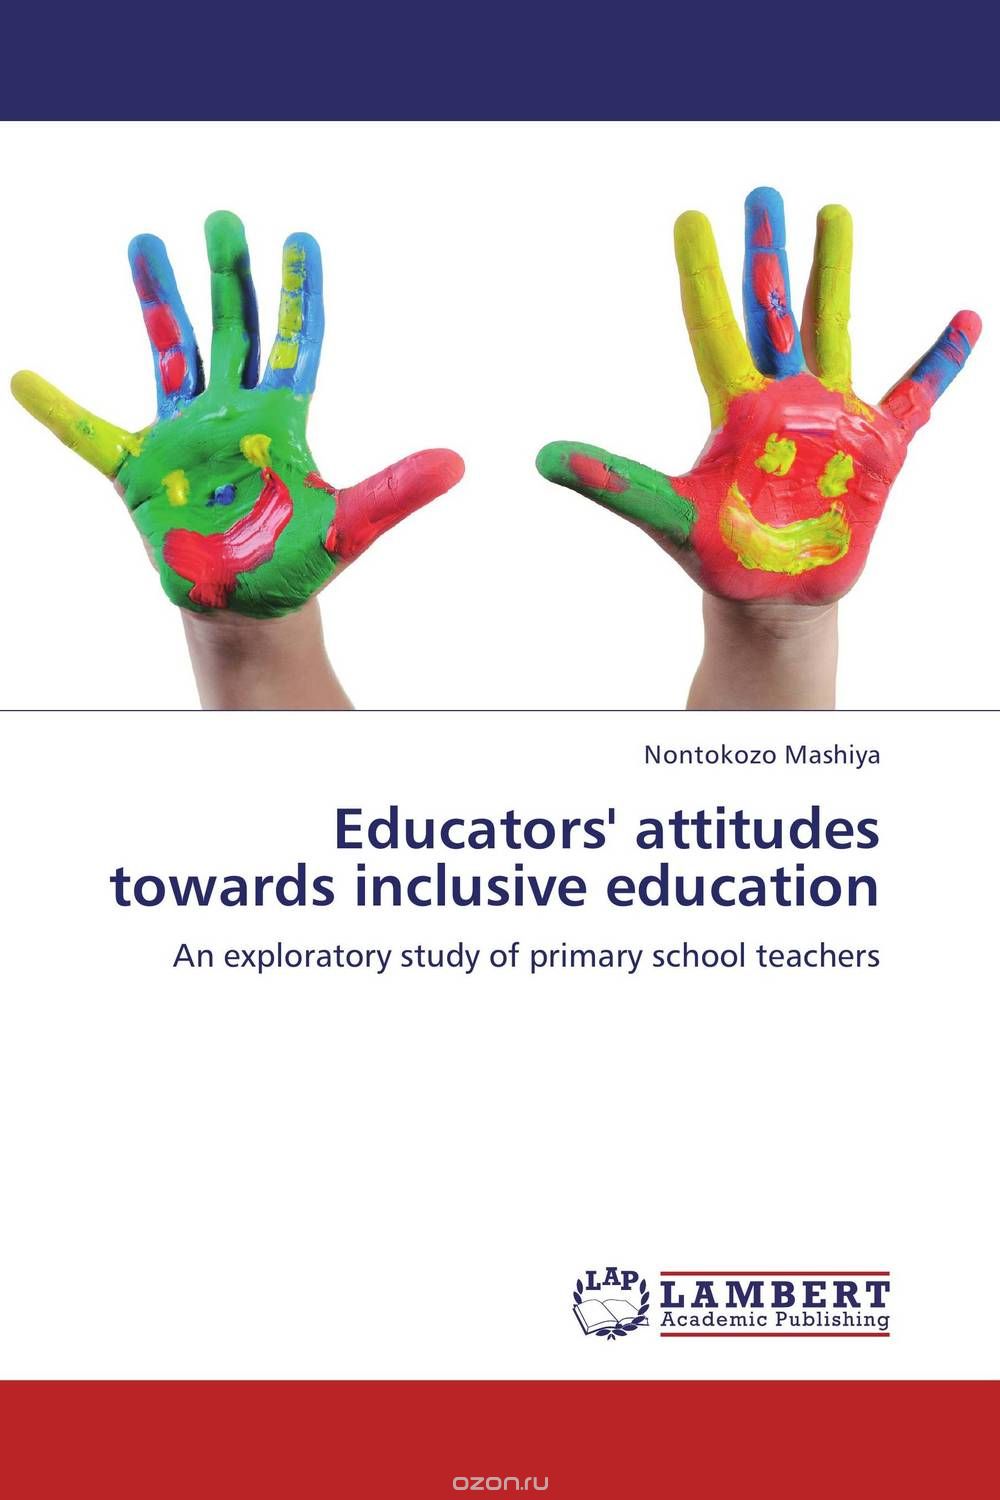 Скачать книгу "Educators' attitudes towards inclusive education"